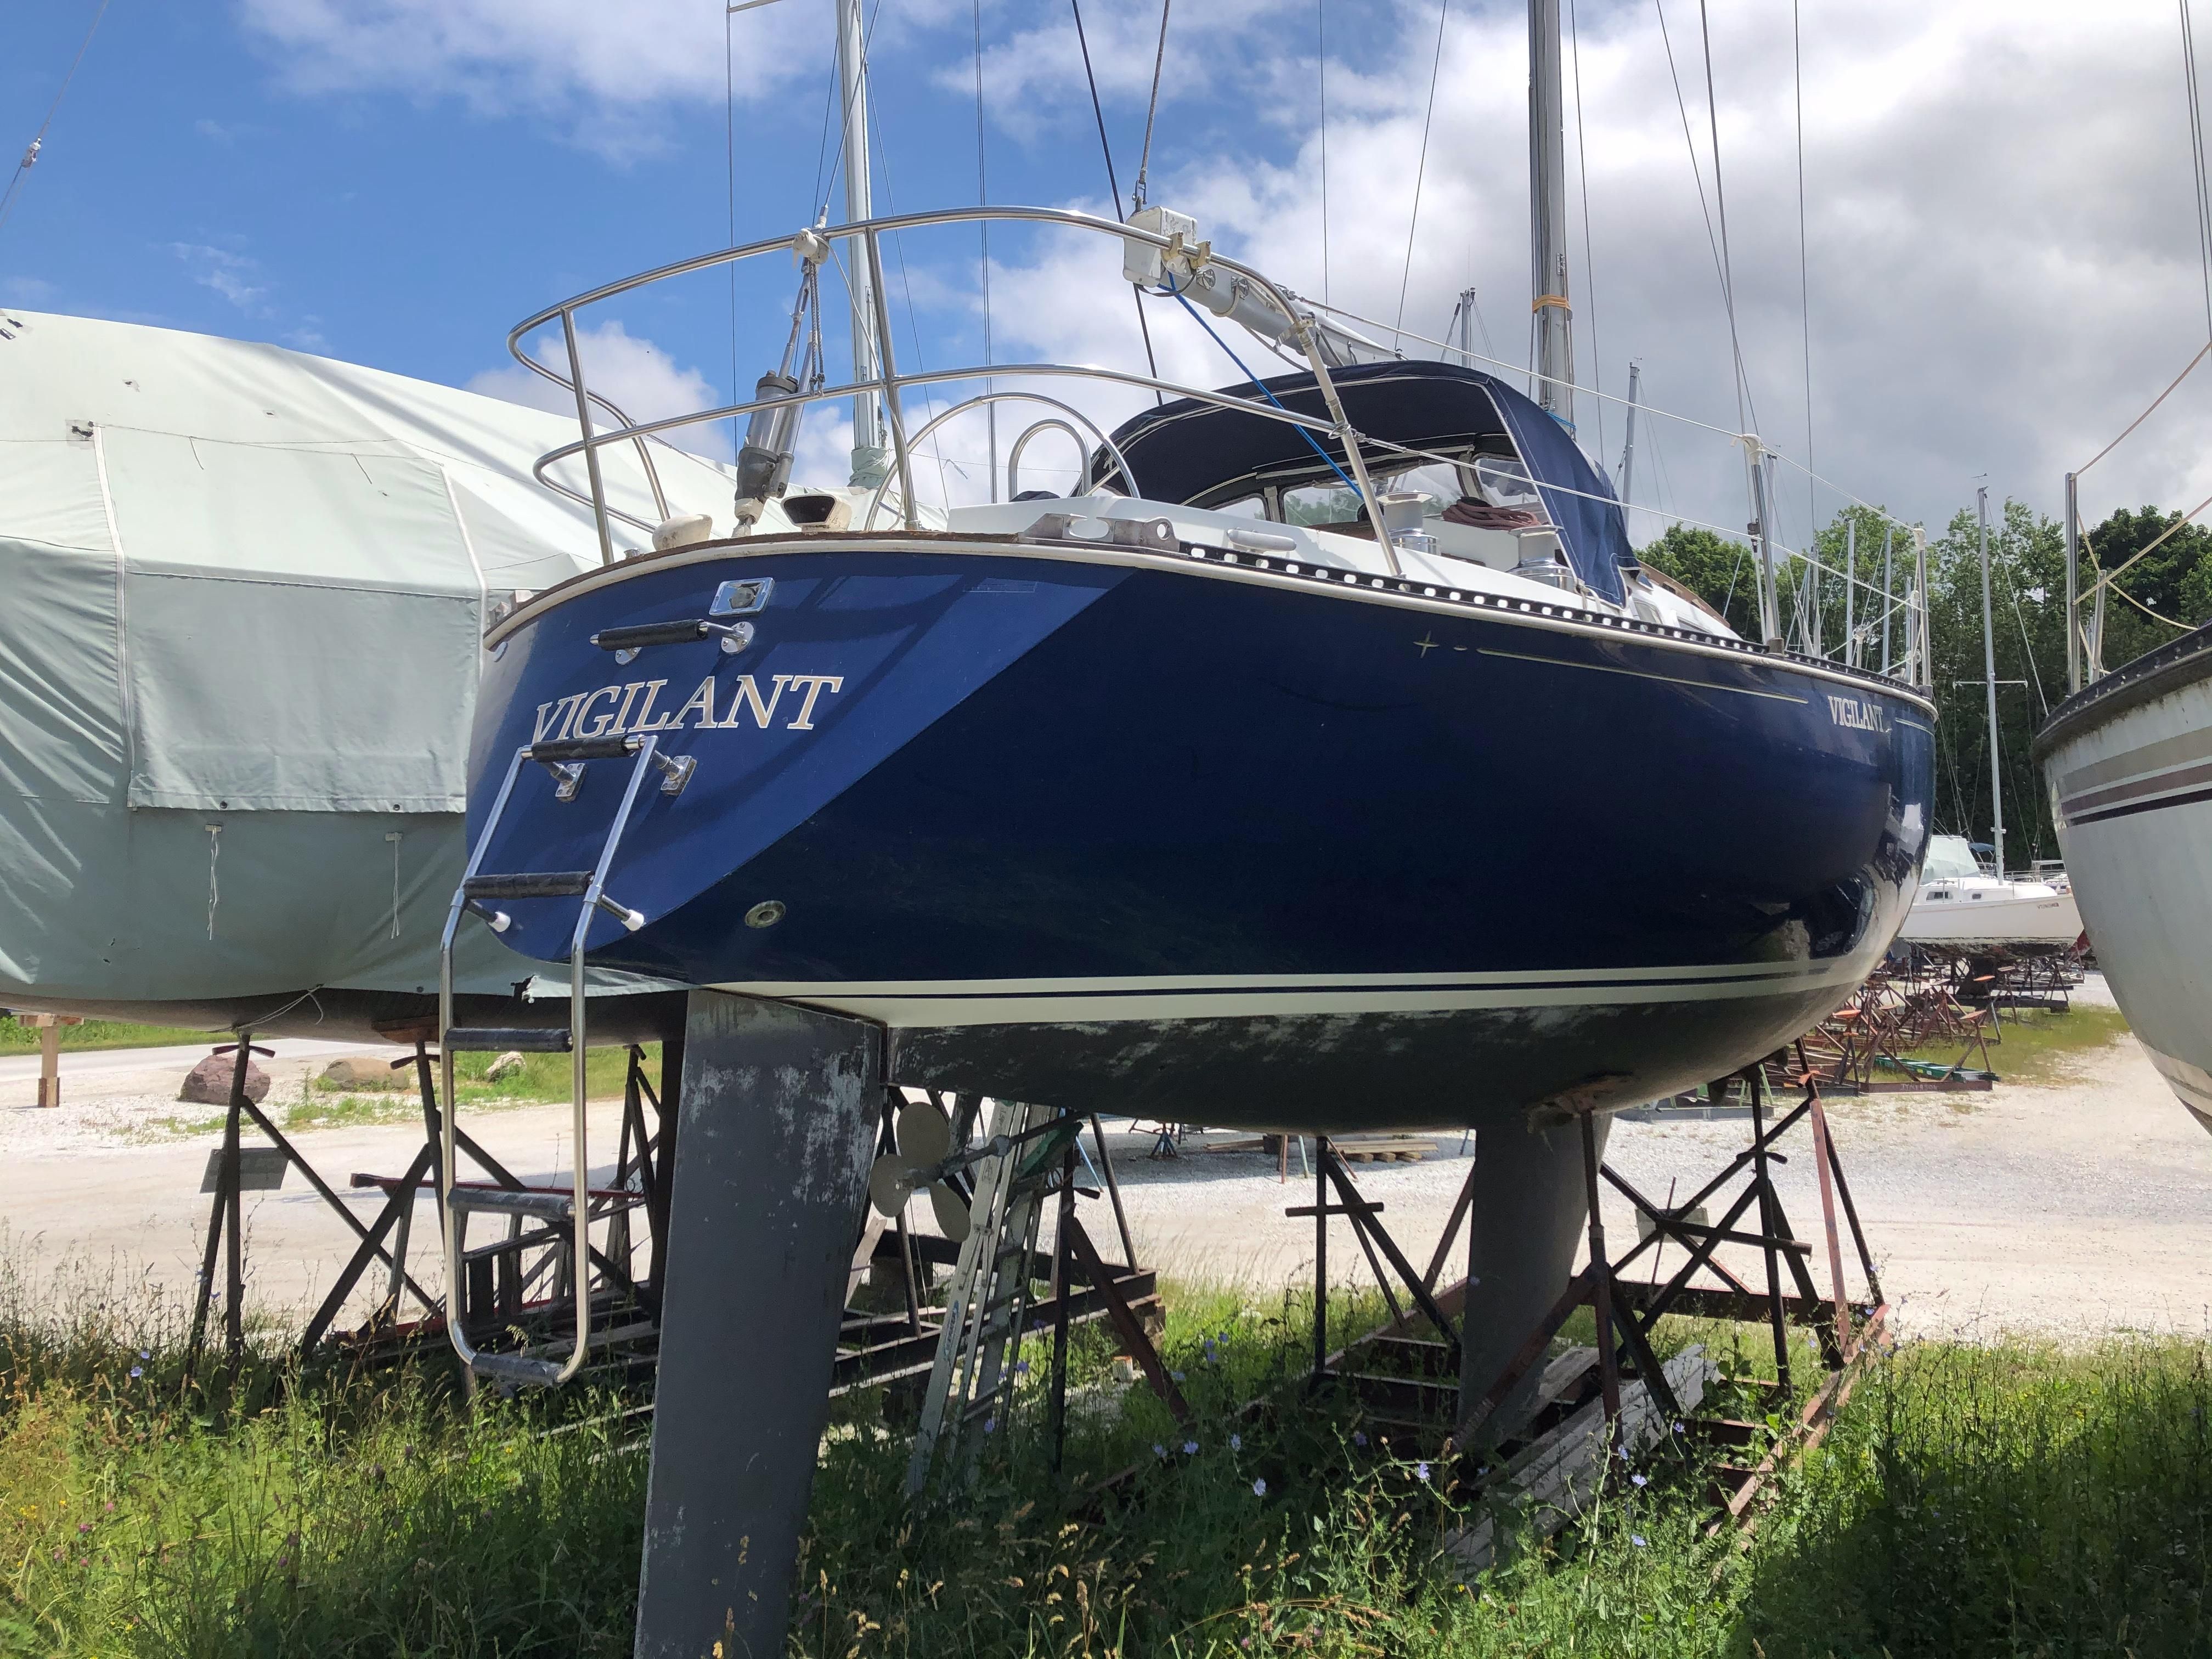 c&c 36 sailboat for sale